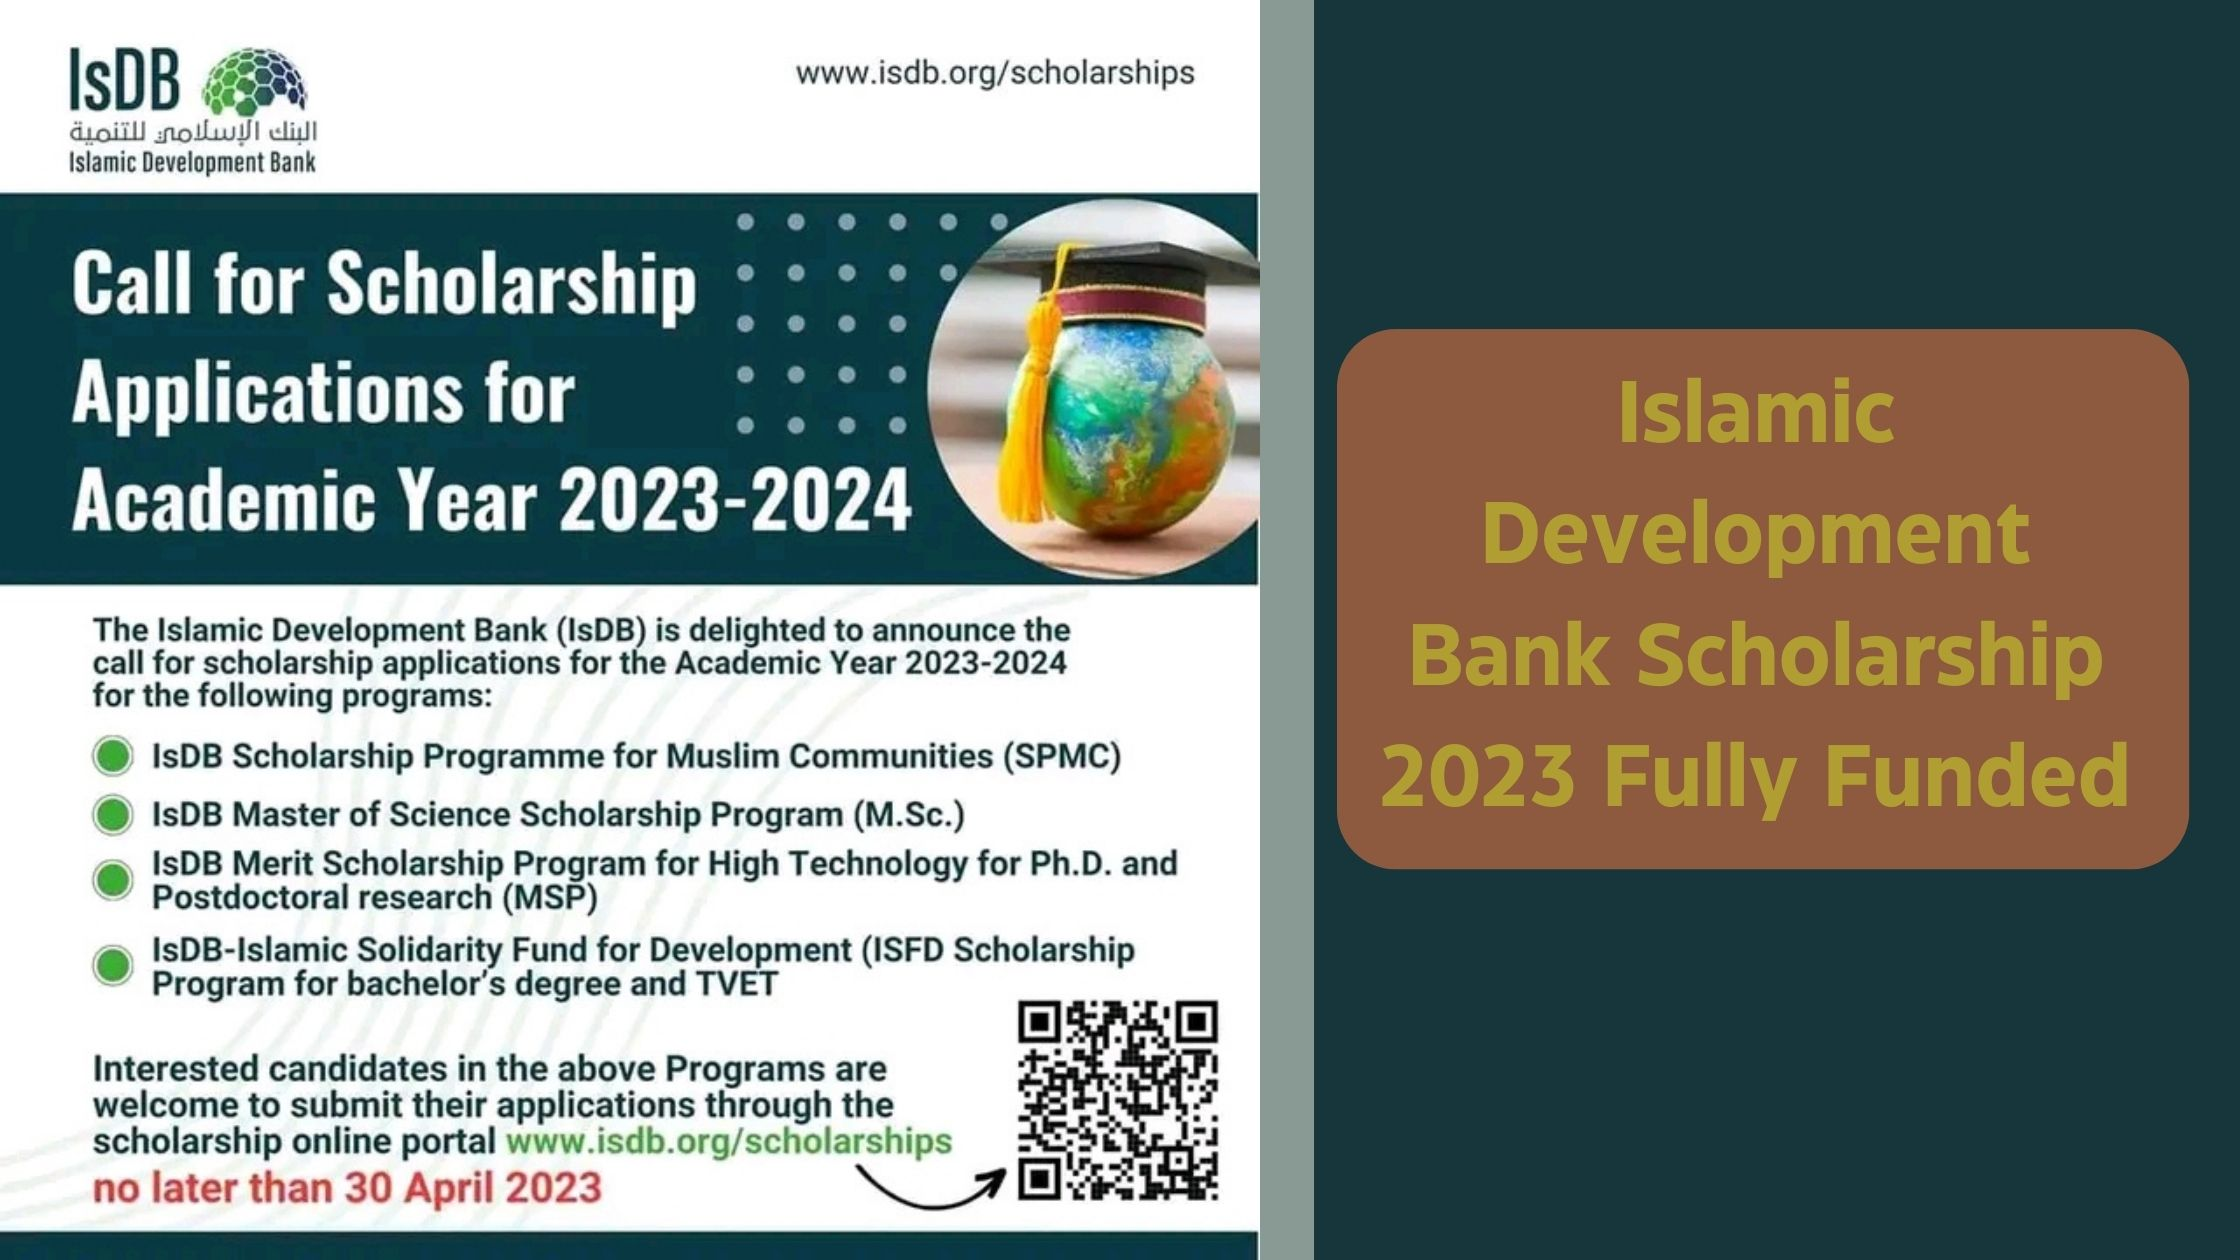 Islamic Development Bank Scholarship 2023 Fully Funded